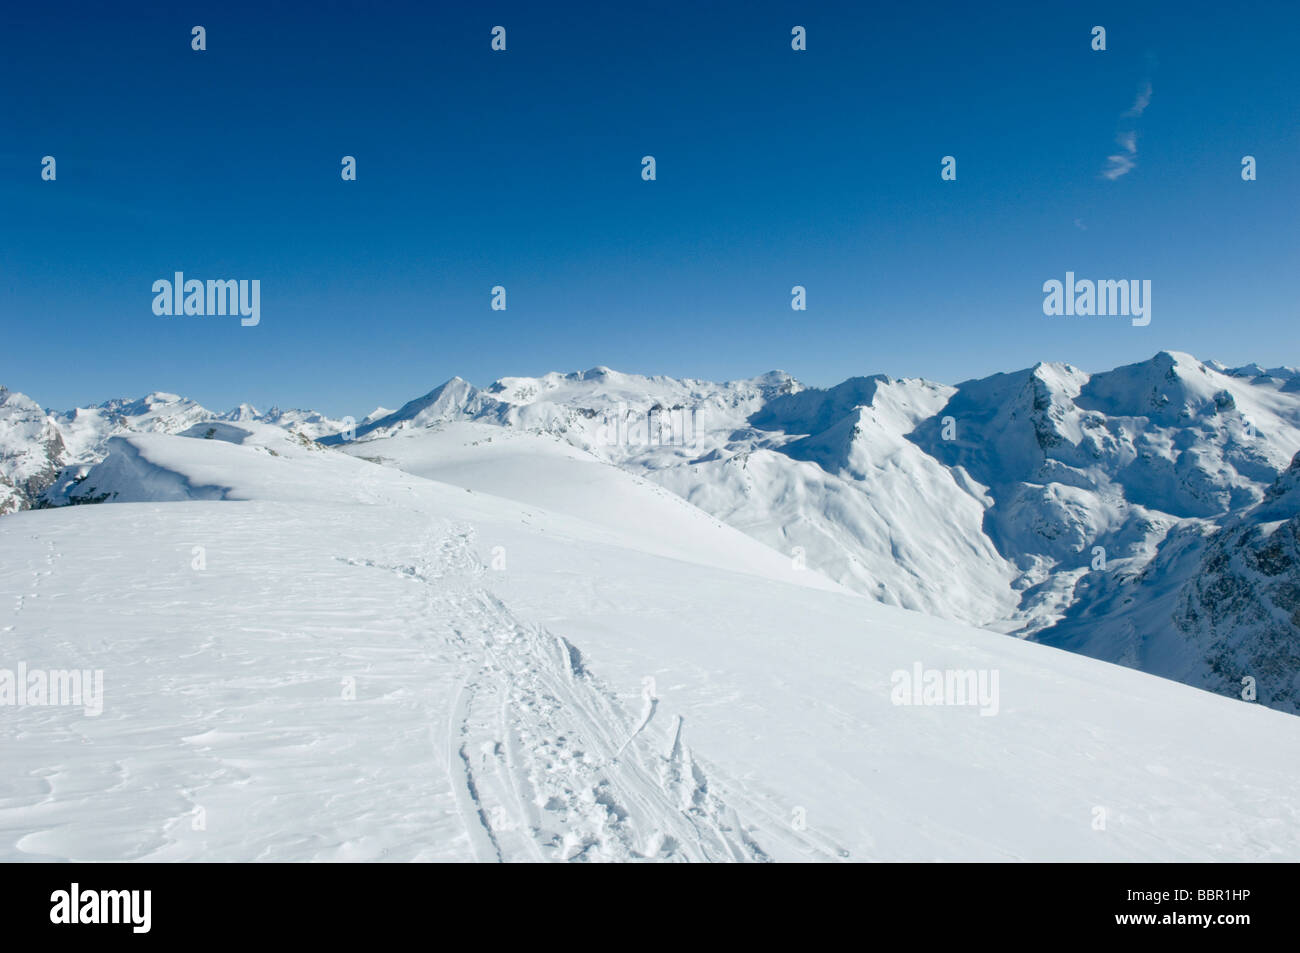 French Alps Winter Ski Resort Stock Photo